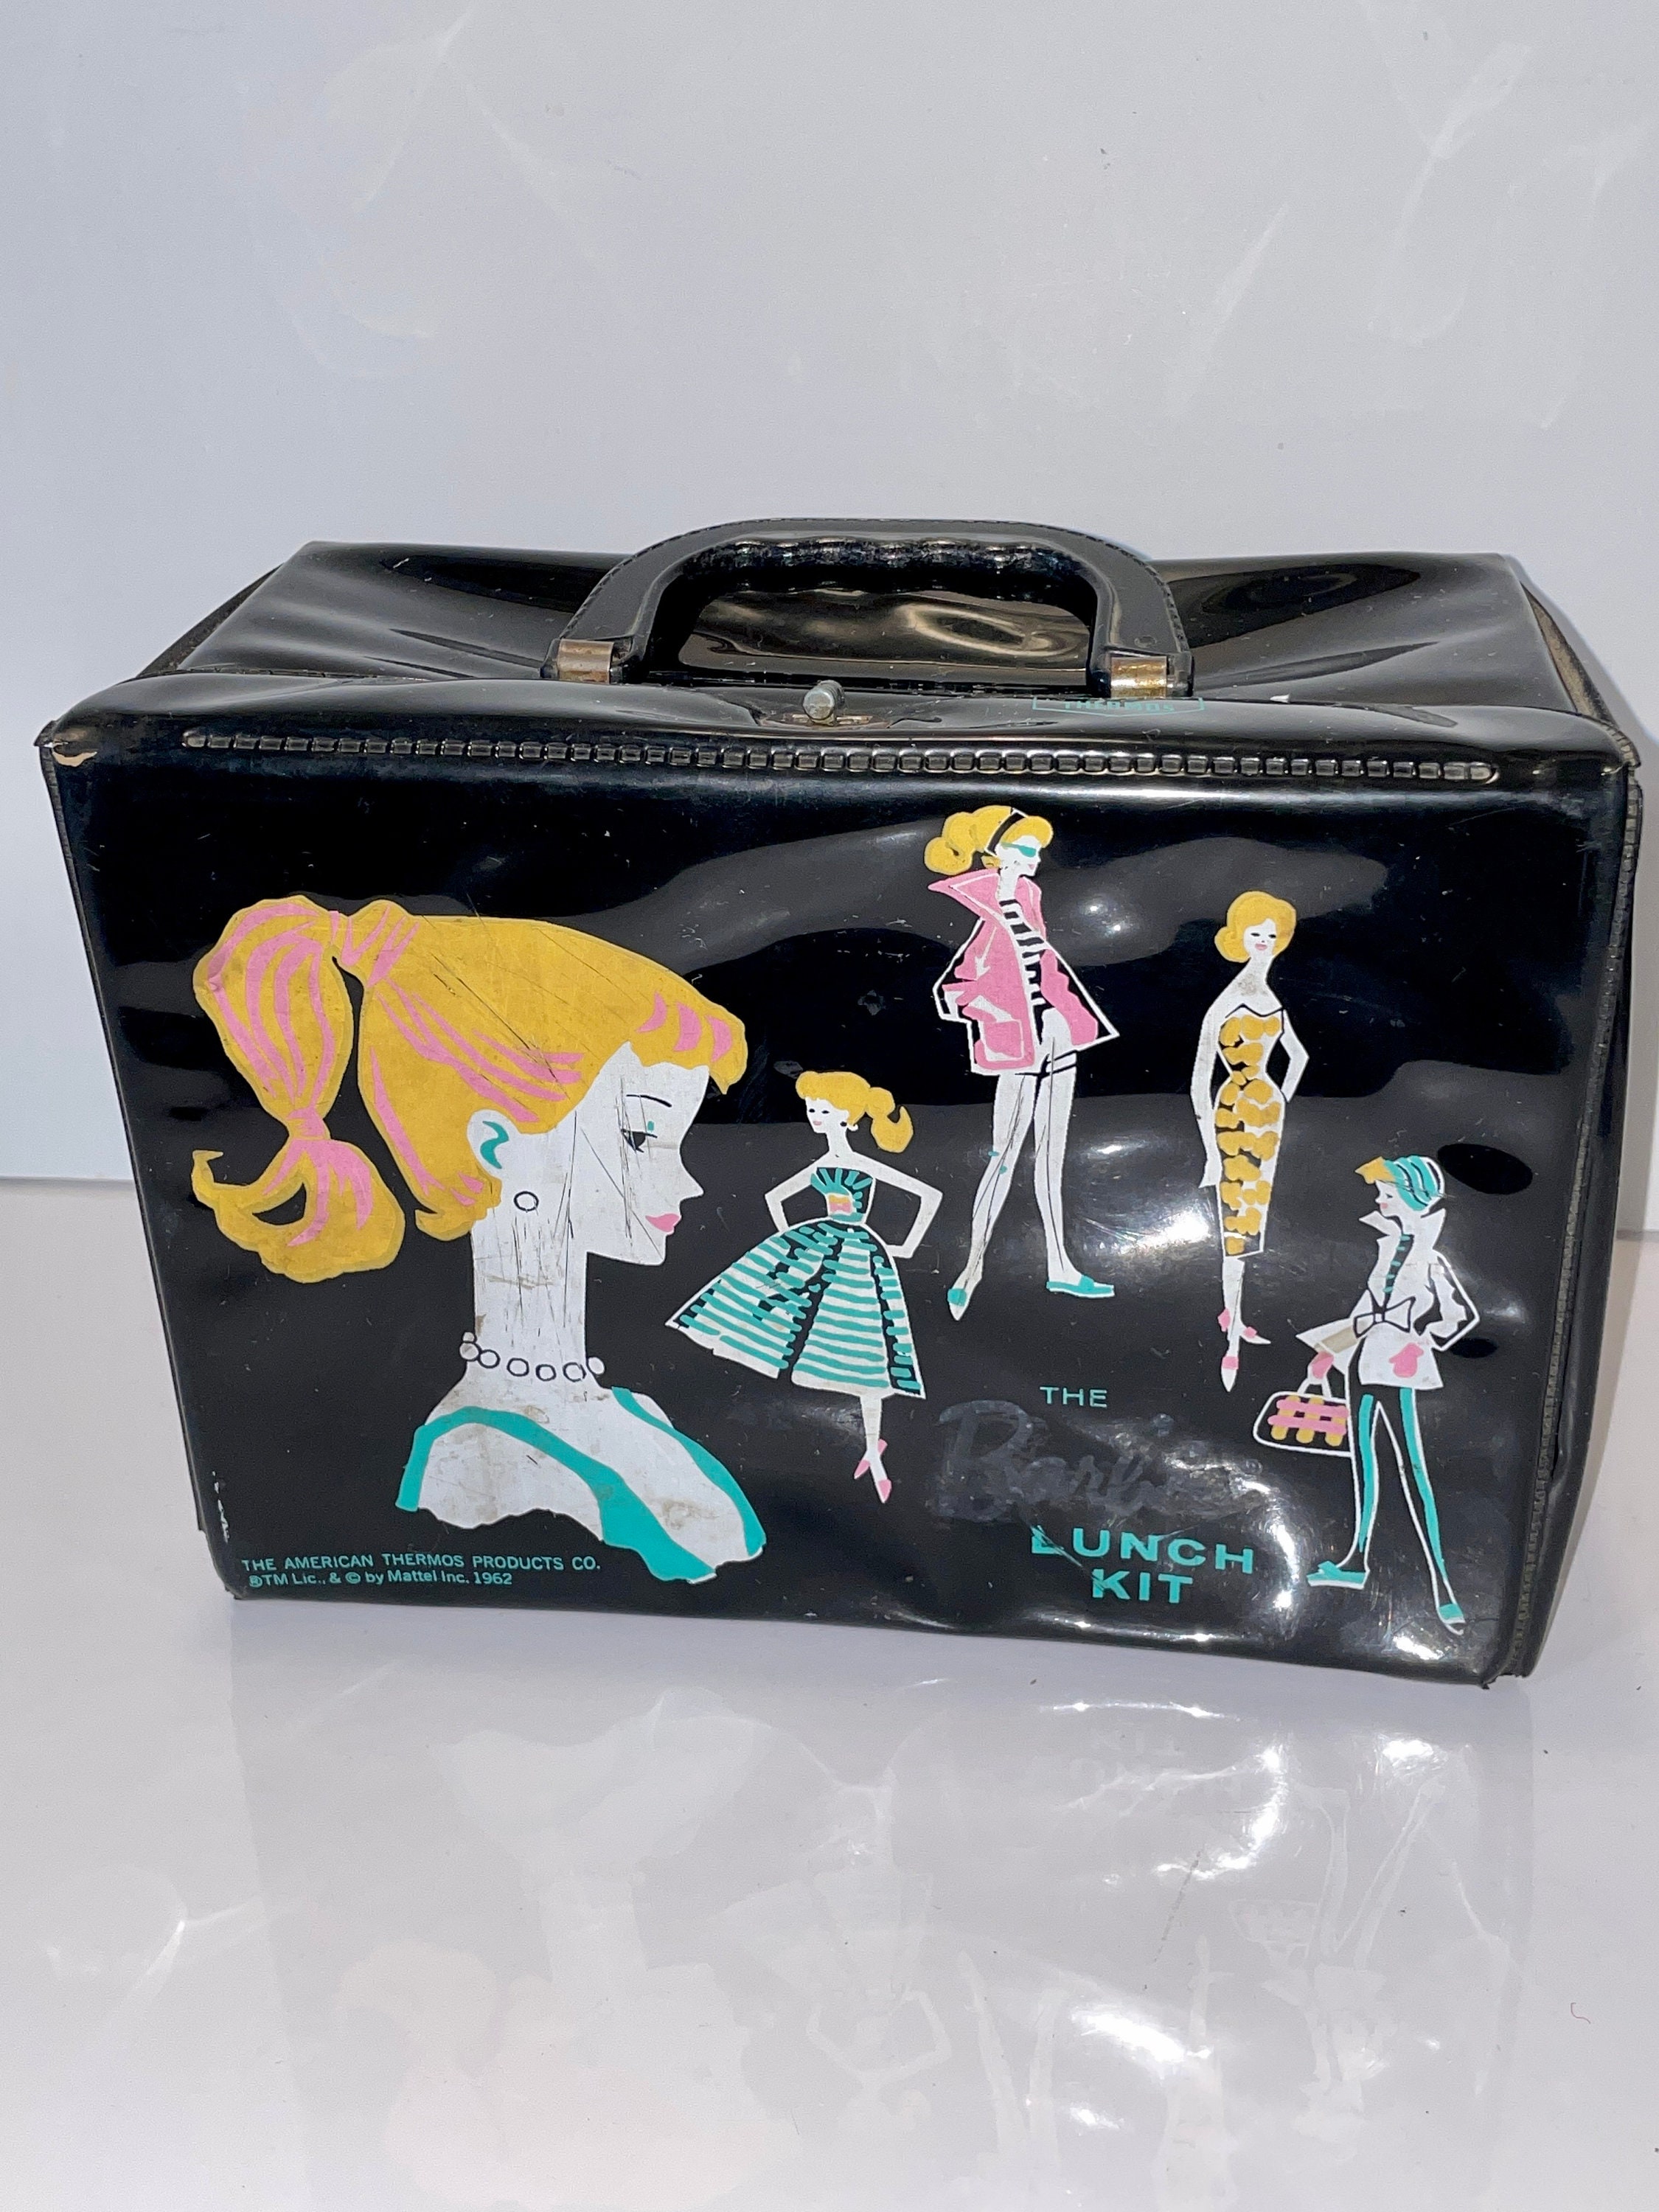 Barbie Lunch Bag - (MT-DLB-B05-22BTS) – Heys